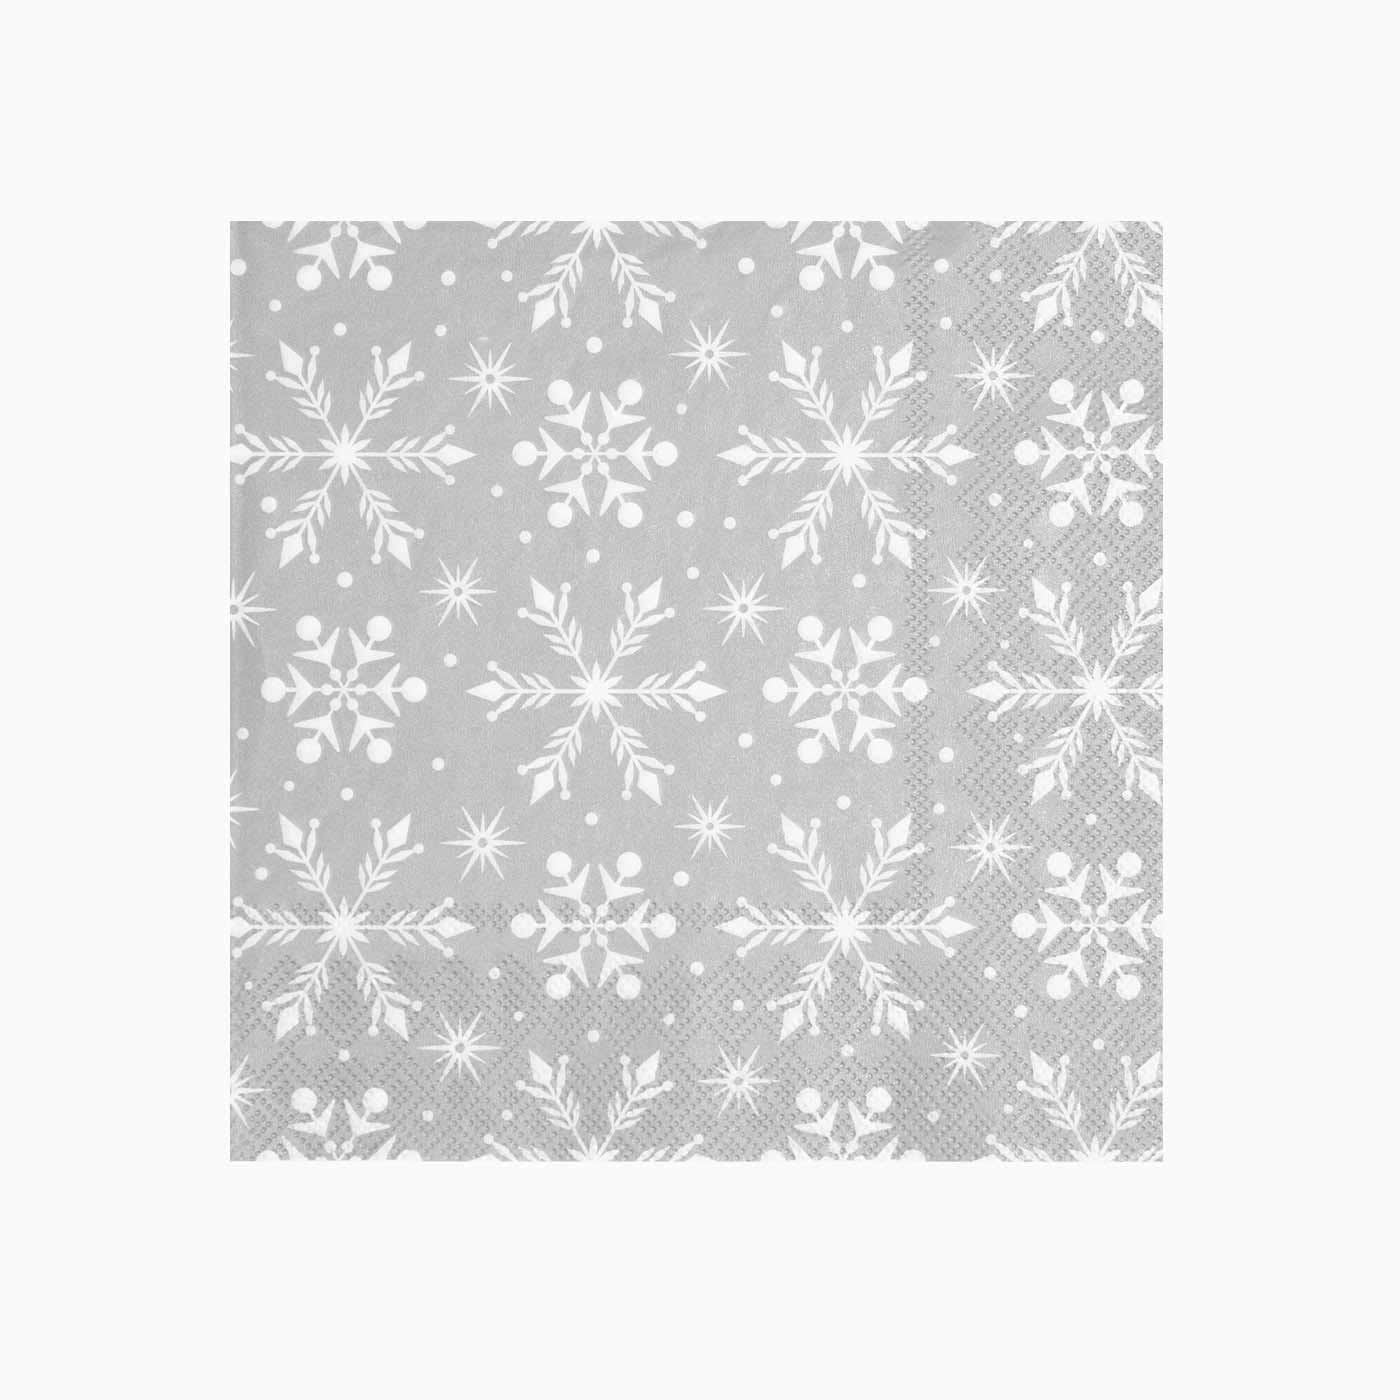 Silver snowfall Christmas paper napkins